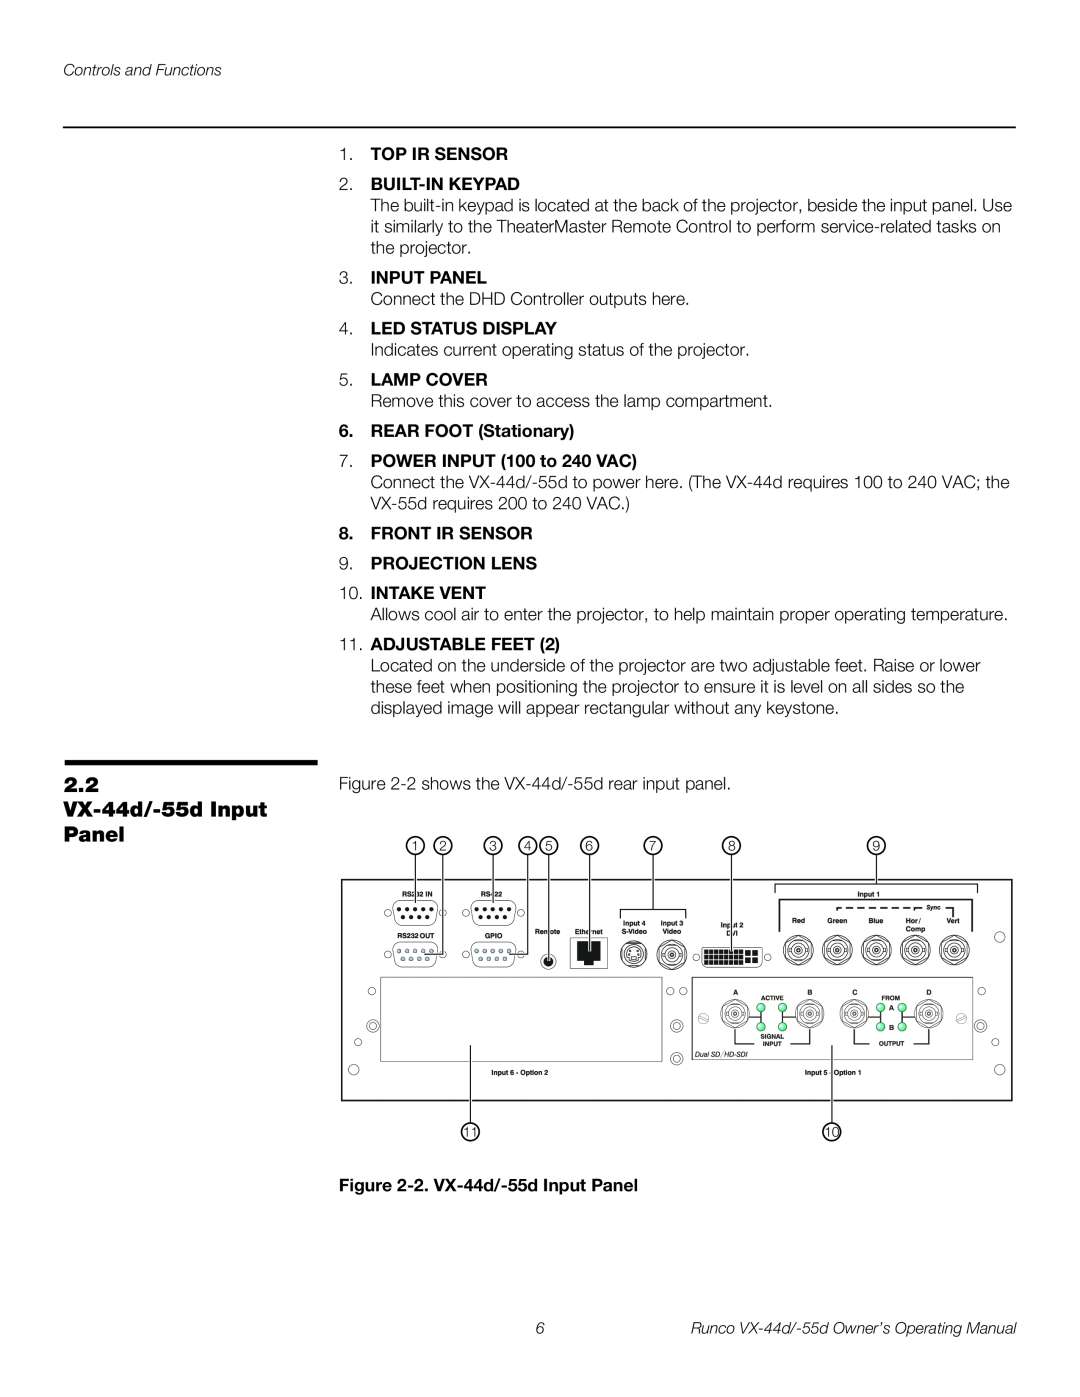 Runco VX-44D, VX-55D manual 2.2 VX-44d/-55d Input Panel, TOP IR SENSOR 2. BUILT-IN KEYPAD, Led Status Display, Lamp Cover 